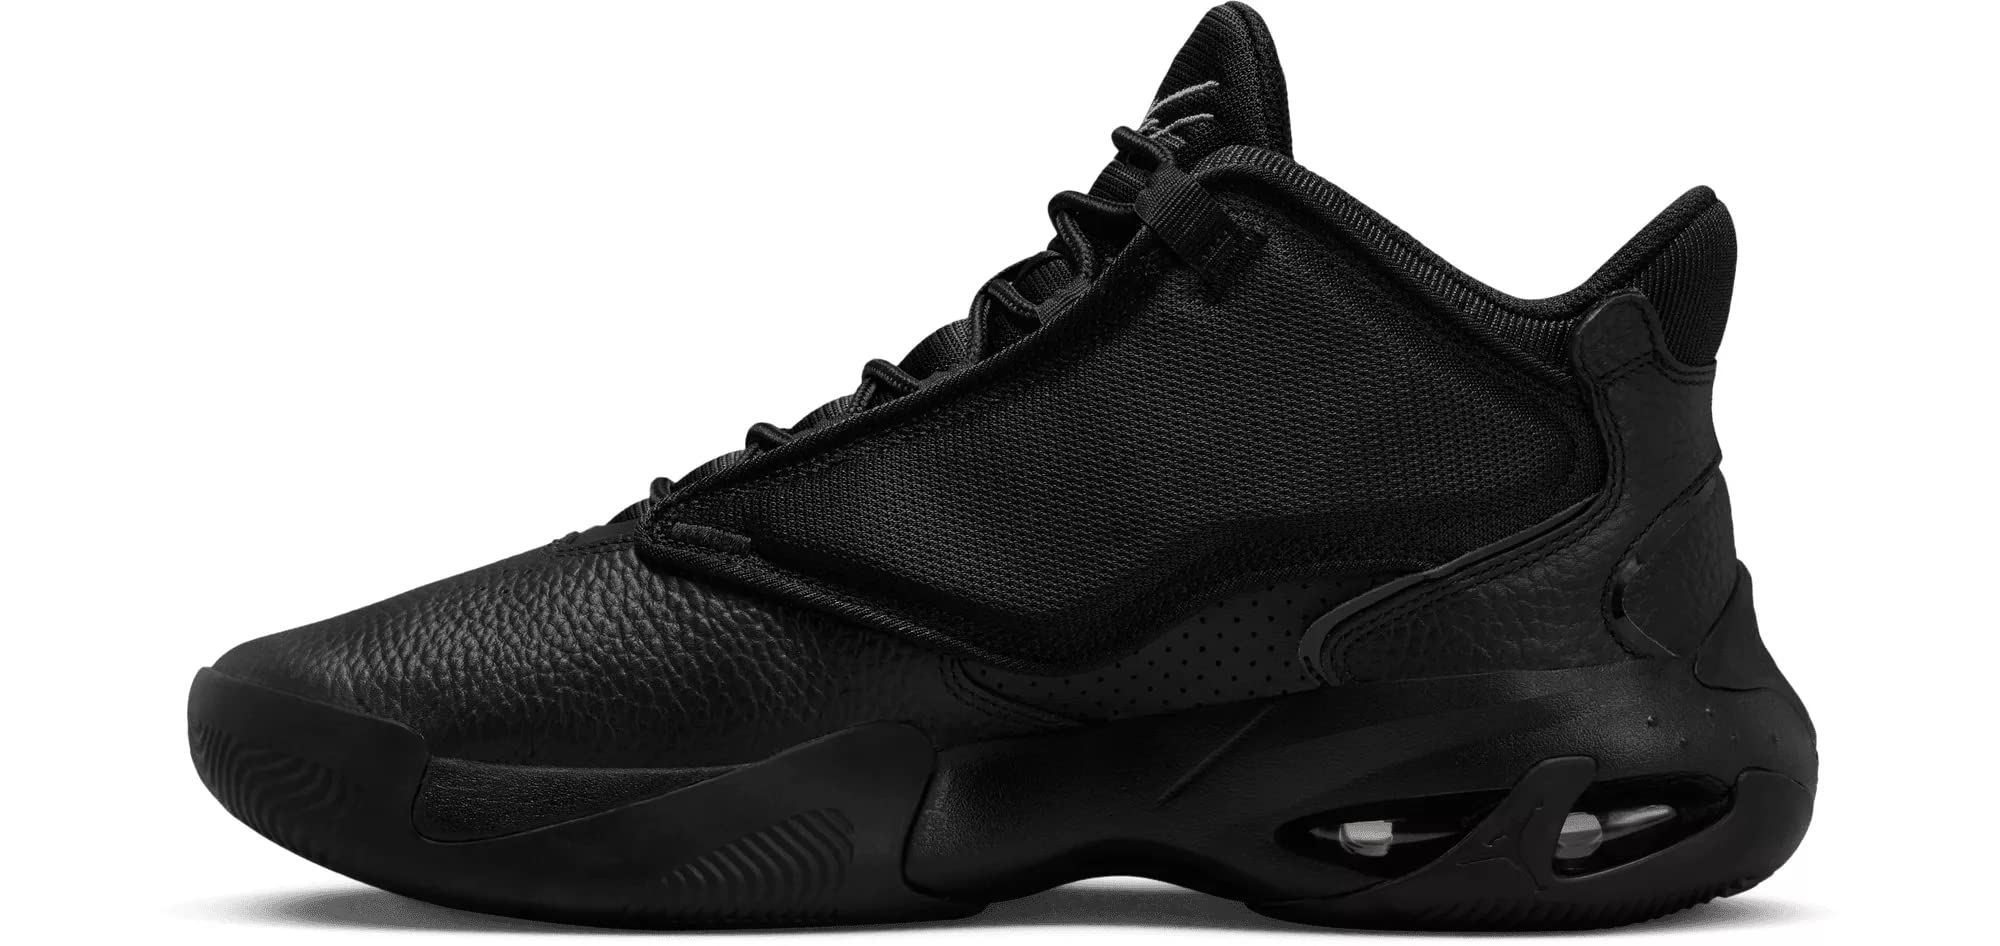 Nike Men's Jordan Max Aura 4 Shoes Black Cat Black/Anthracite-Black (DN3687 001) - 10